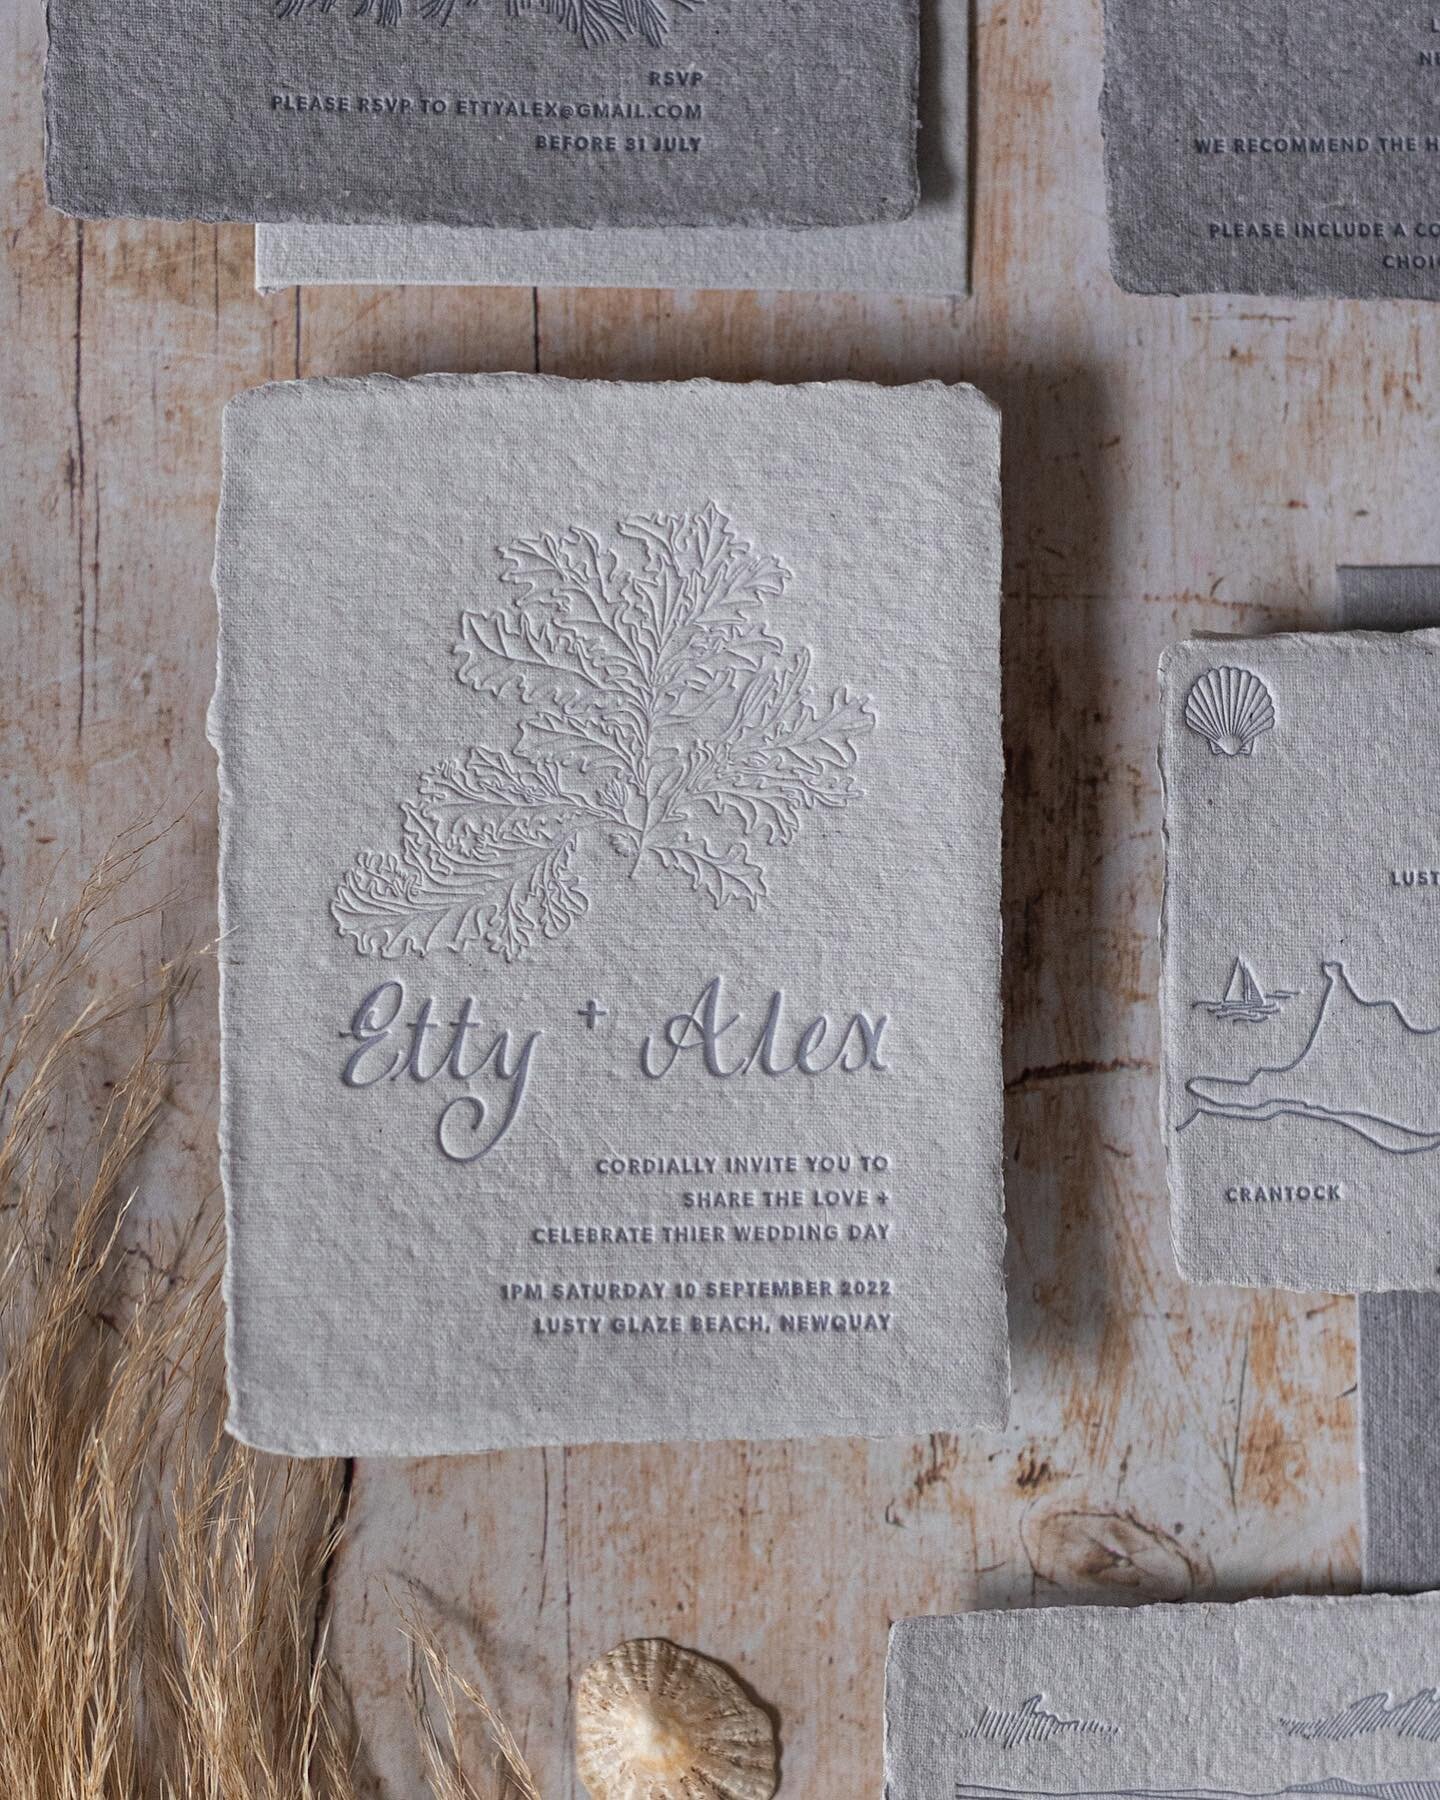 Custom wedding stationery for Etty + Alex ☽

A beautiful blind letterpress on handmade paper with pretty seaweed illustrations